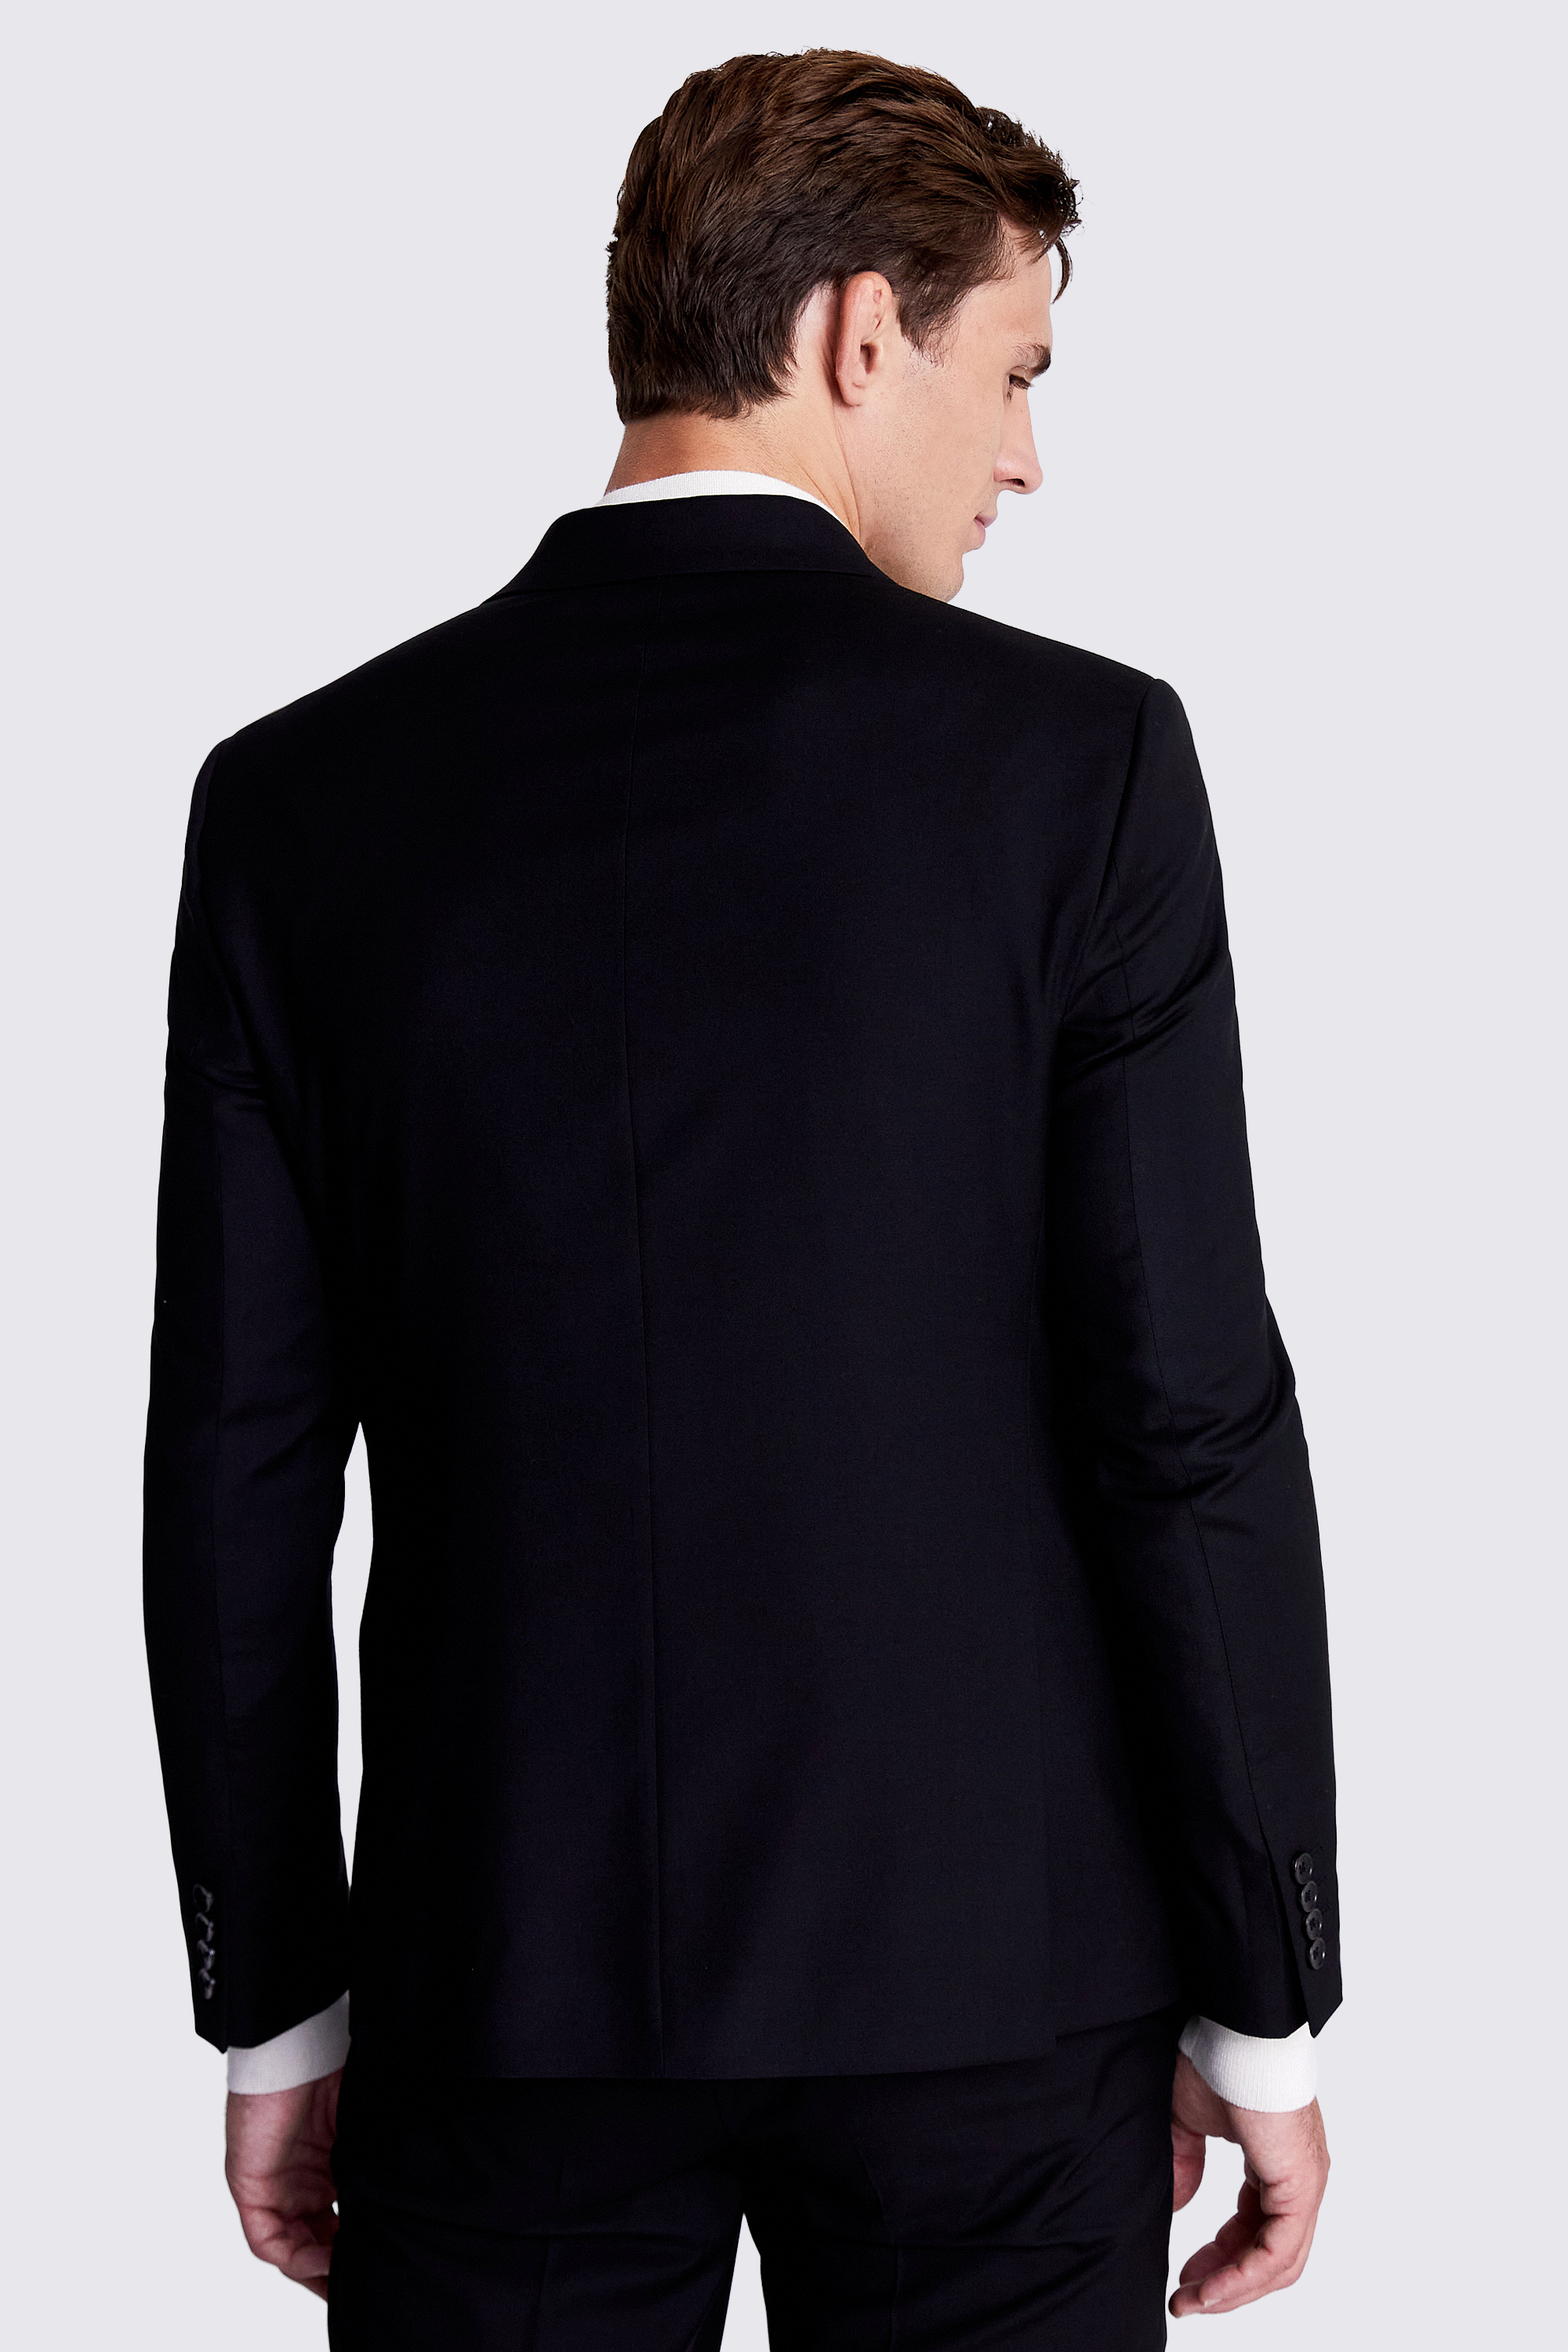 Slim Fit Black Stretch Jacket | Buy Online at Moss